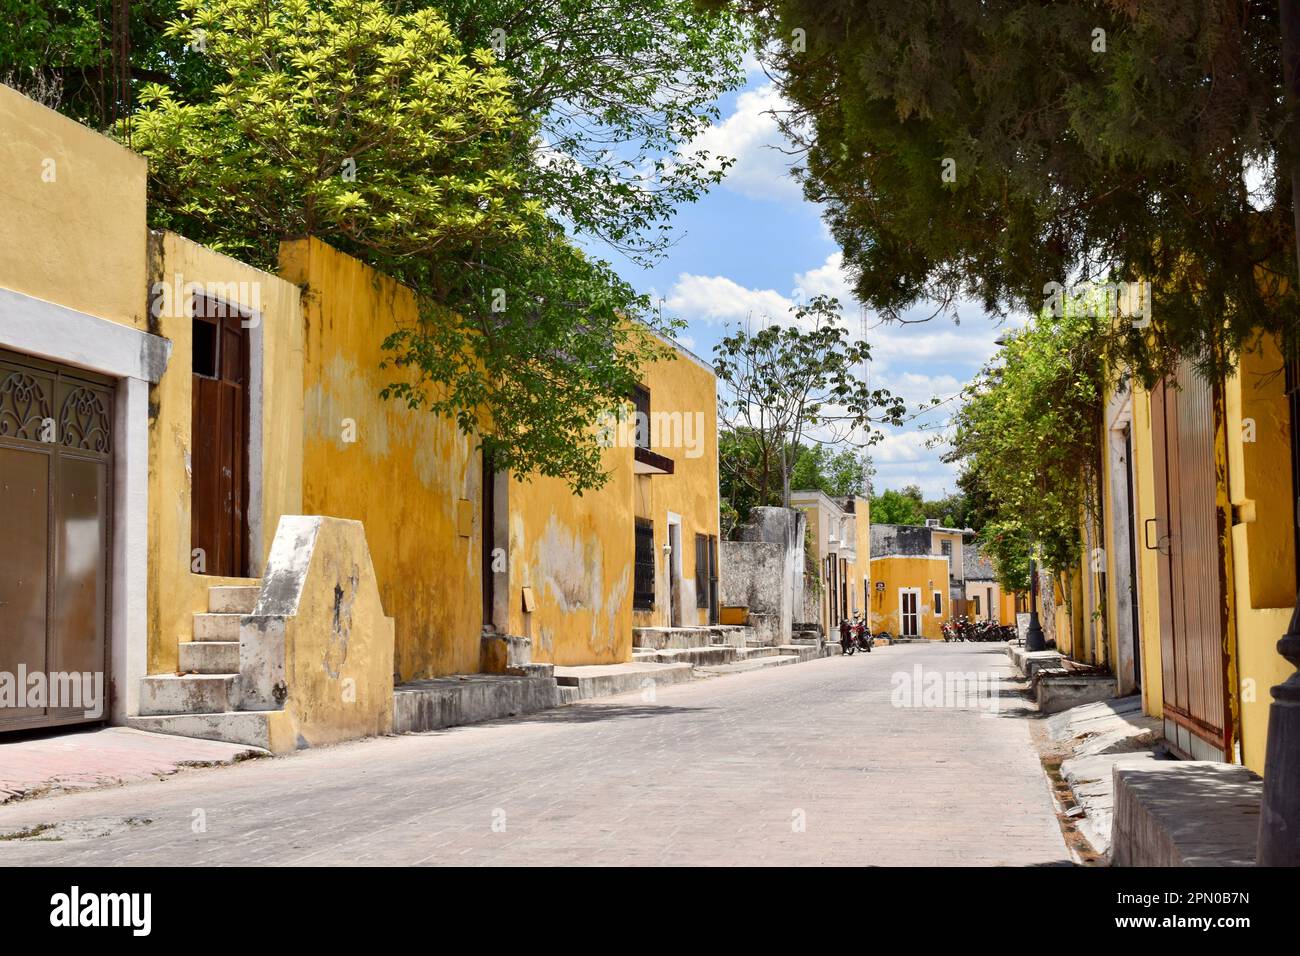 A horizontal shot of a cute side street in the yellow city of Izamal, Yucatan, Mexico. Stock Photo